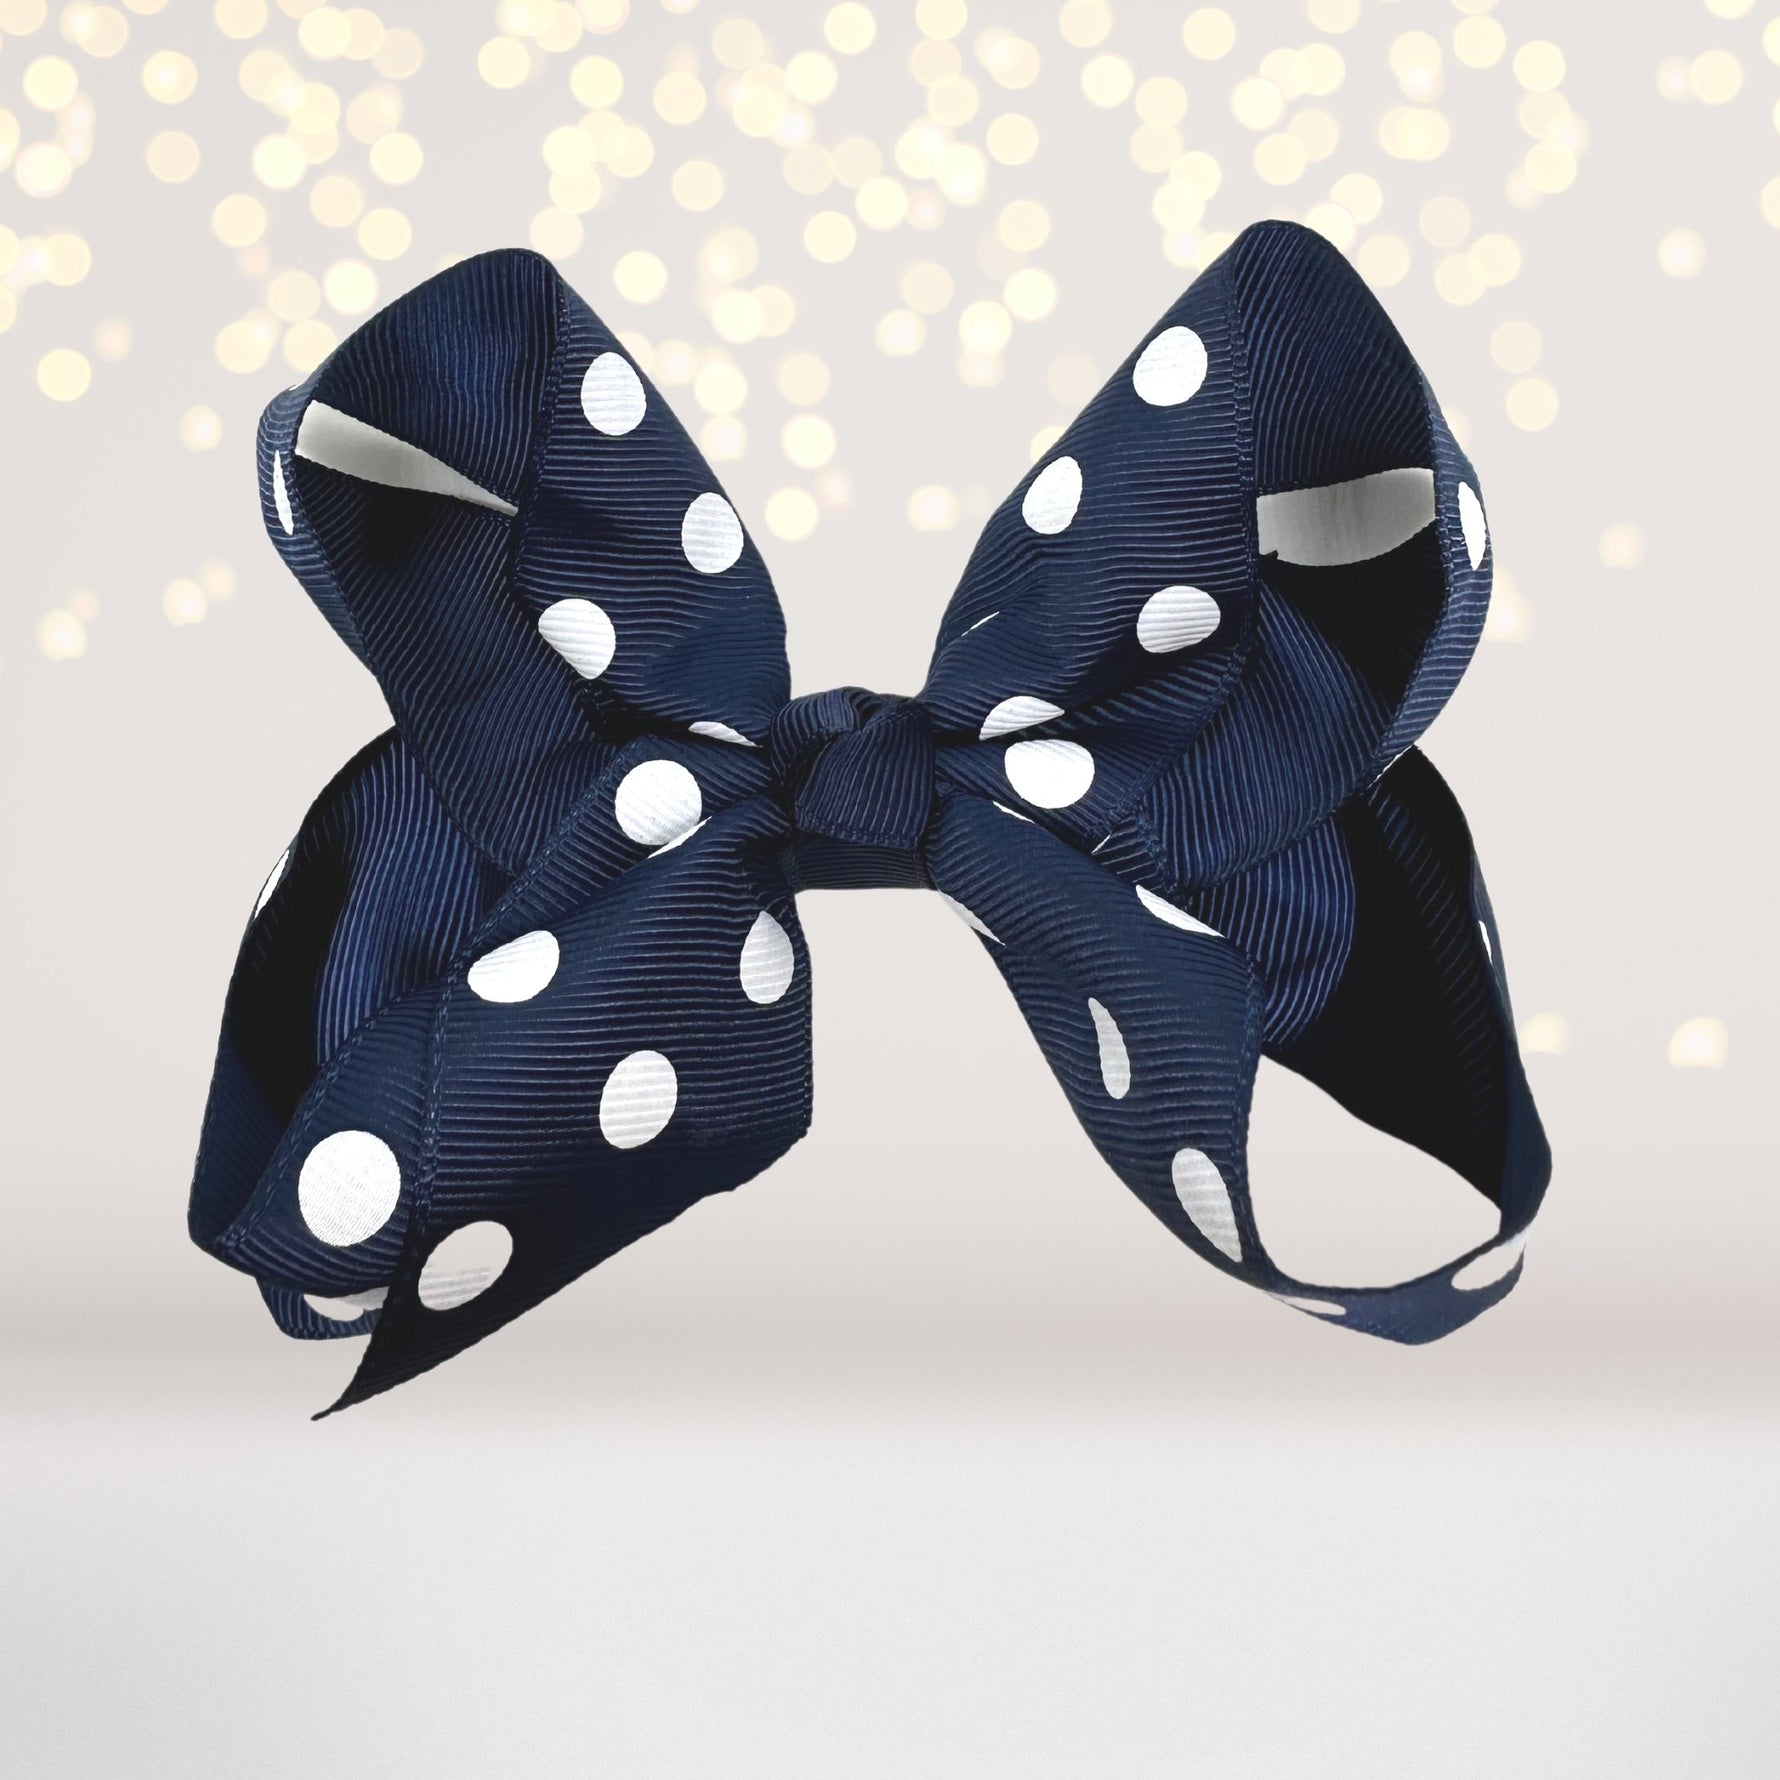 Girls navy blue Polka Dot Hair Bow, 5 inch girls bows for hair, polka dot accessories for hair, hair bow